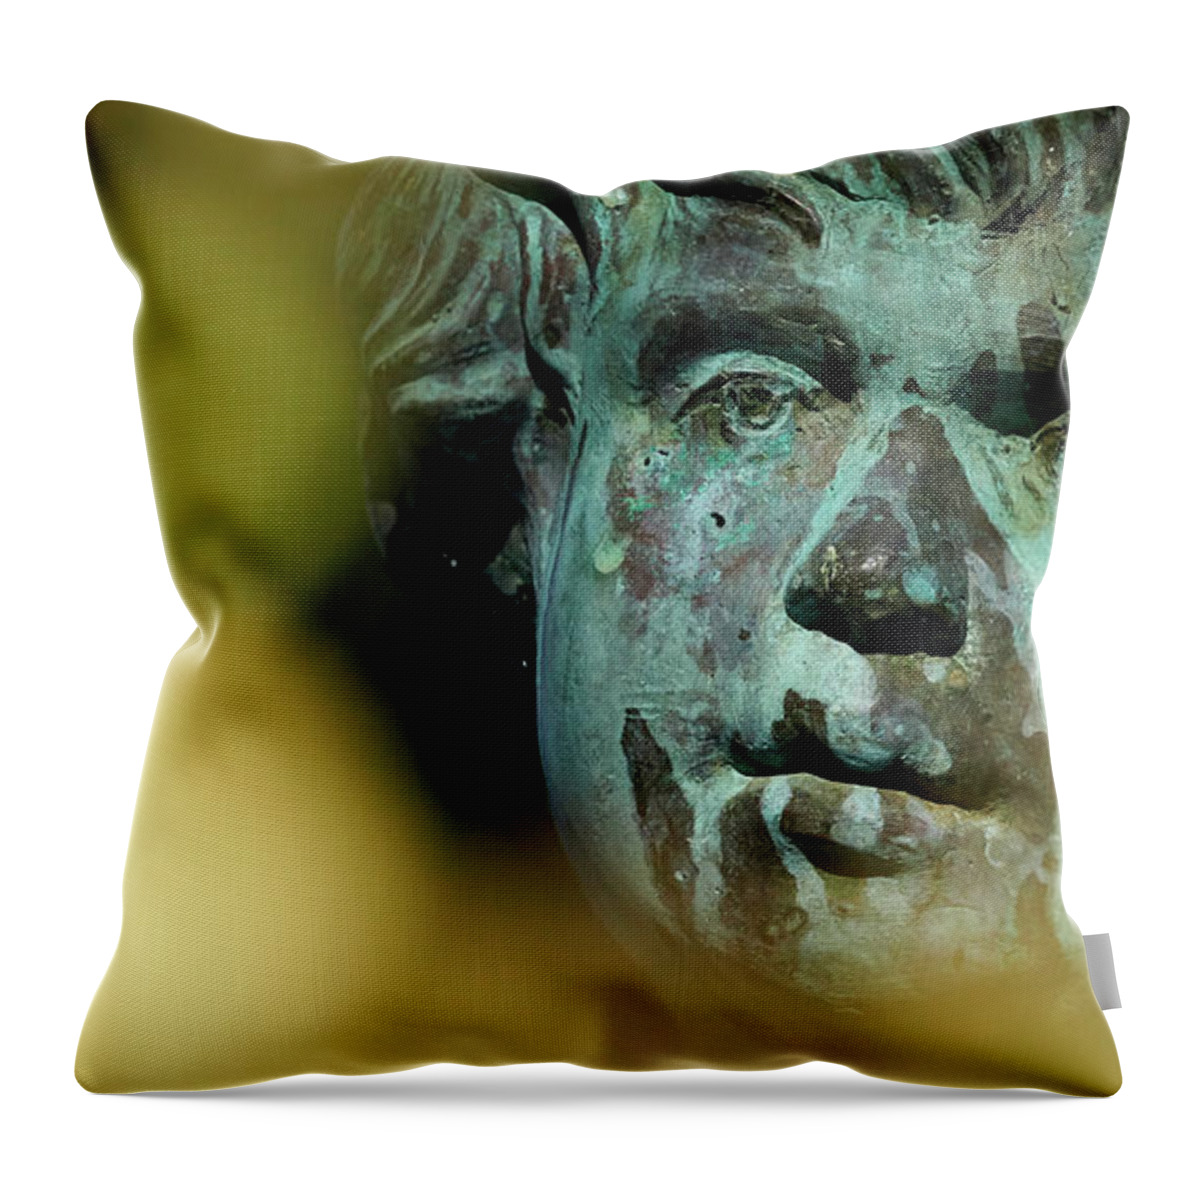 Cherub Throw Pillow featuring the photograph Bronze cherub Statue at Apodaca Mall by Pablo Avanzini